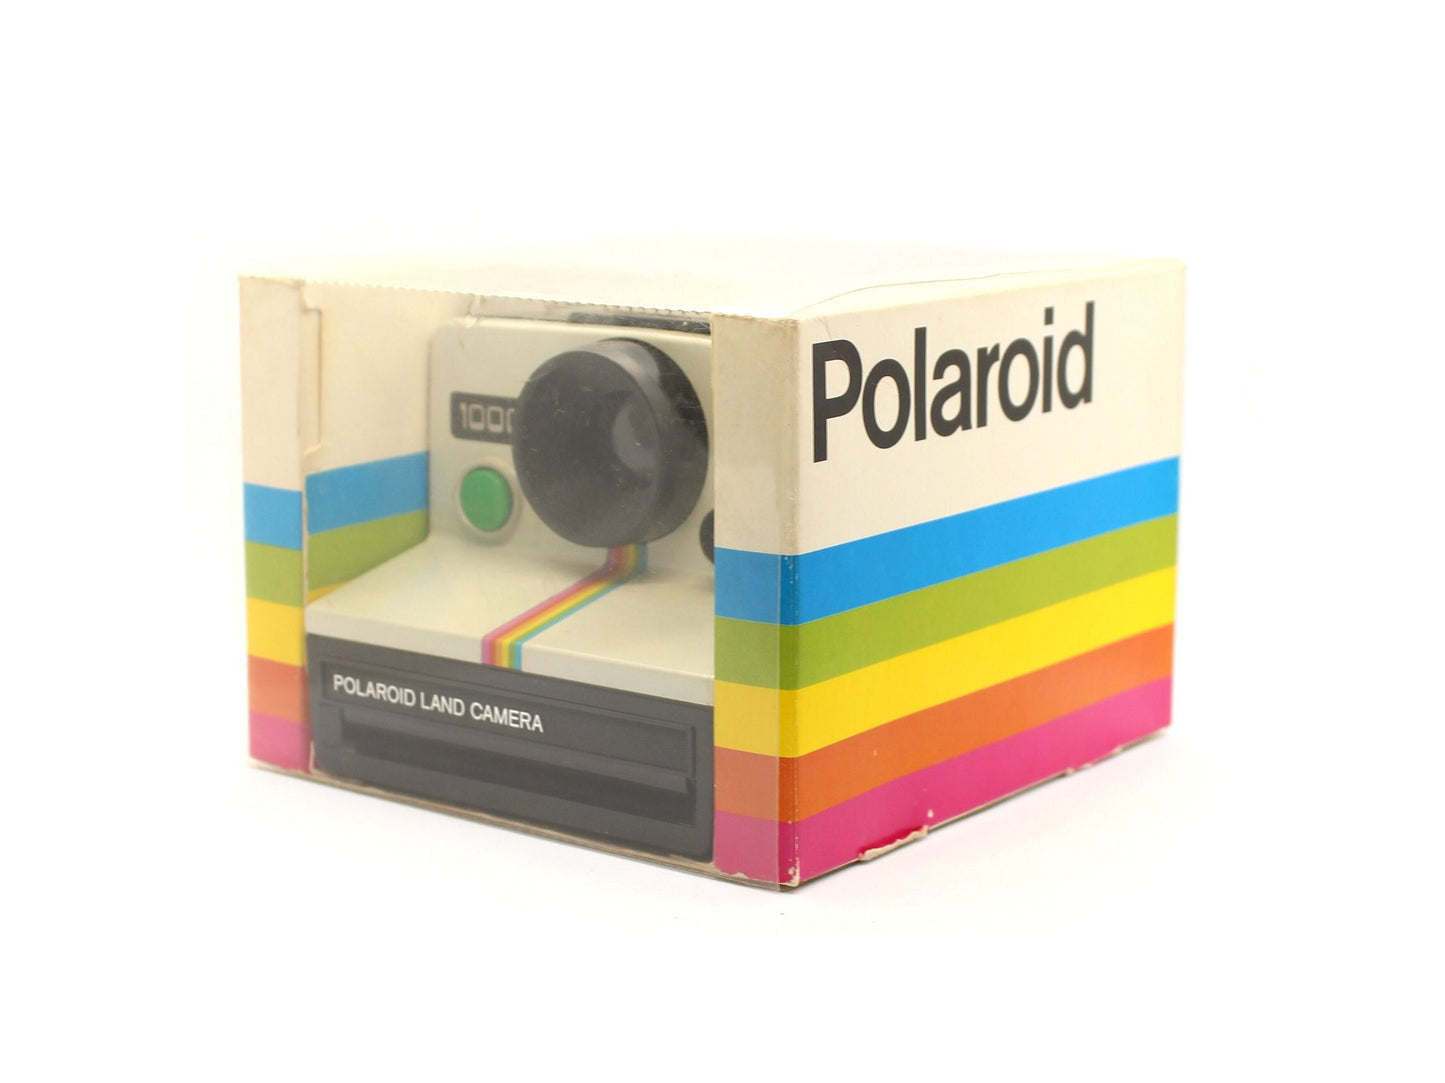 Polaroid 1000 Land Cámera - green button [includes original box and original book instruccions]